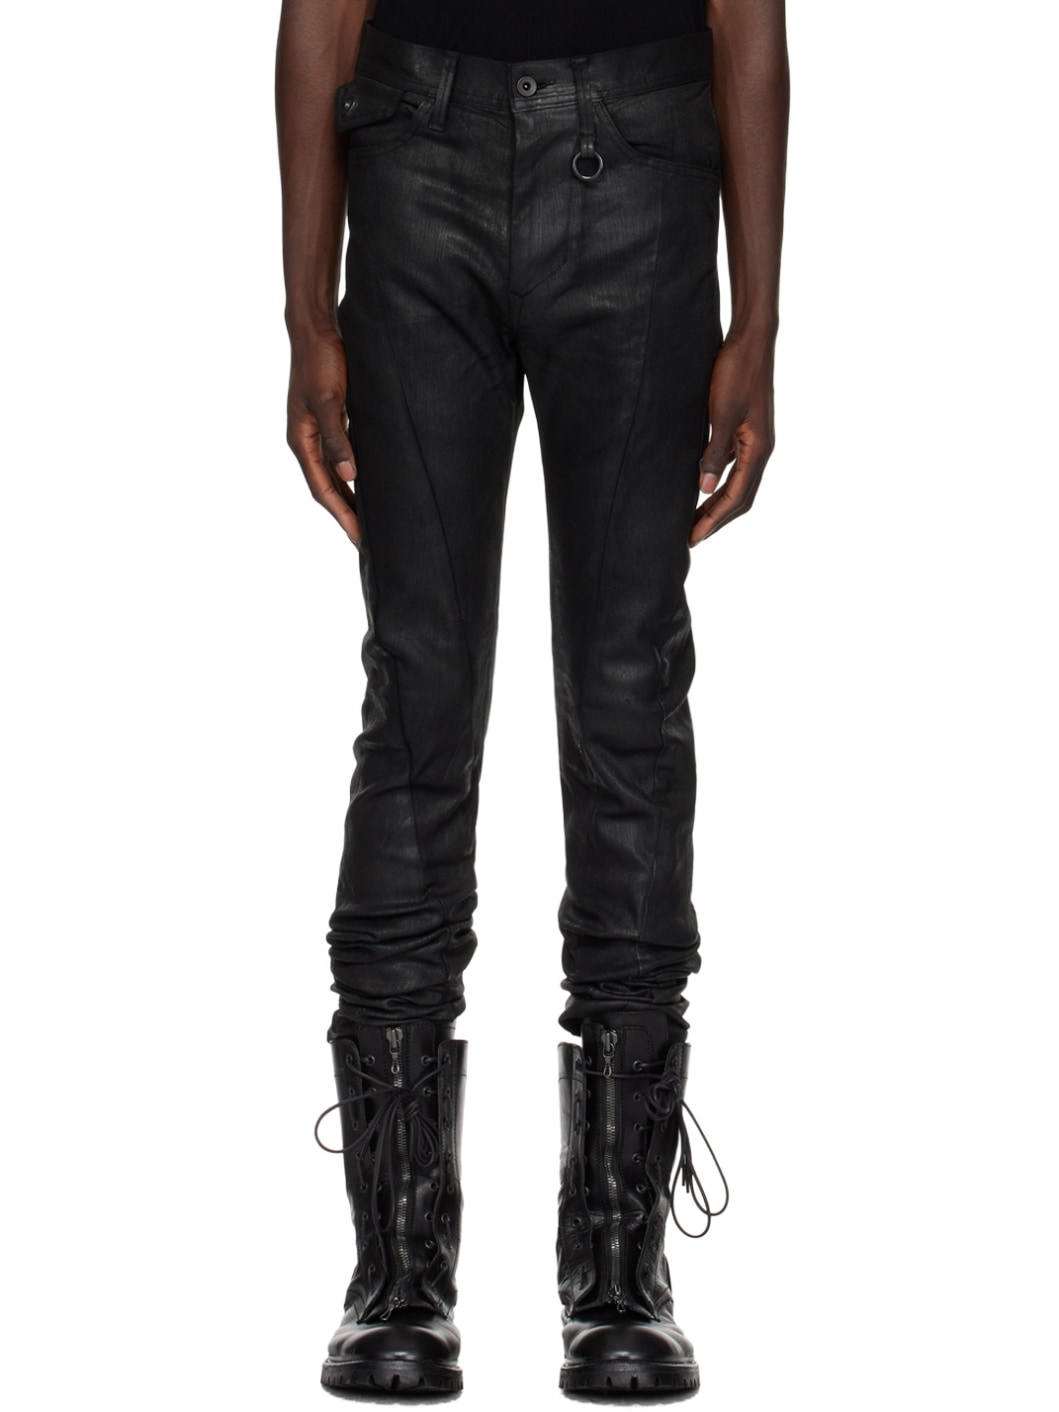 Black Arched Skinny Jeans - 1